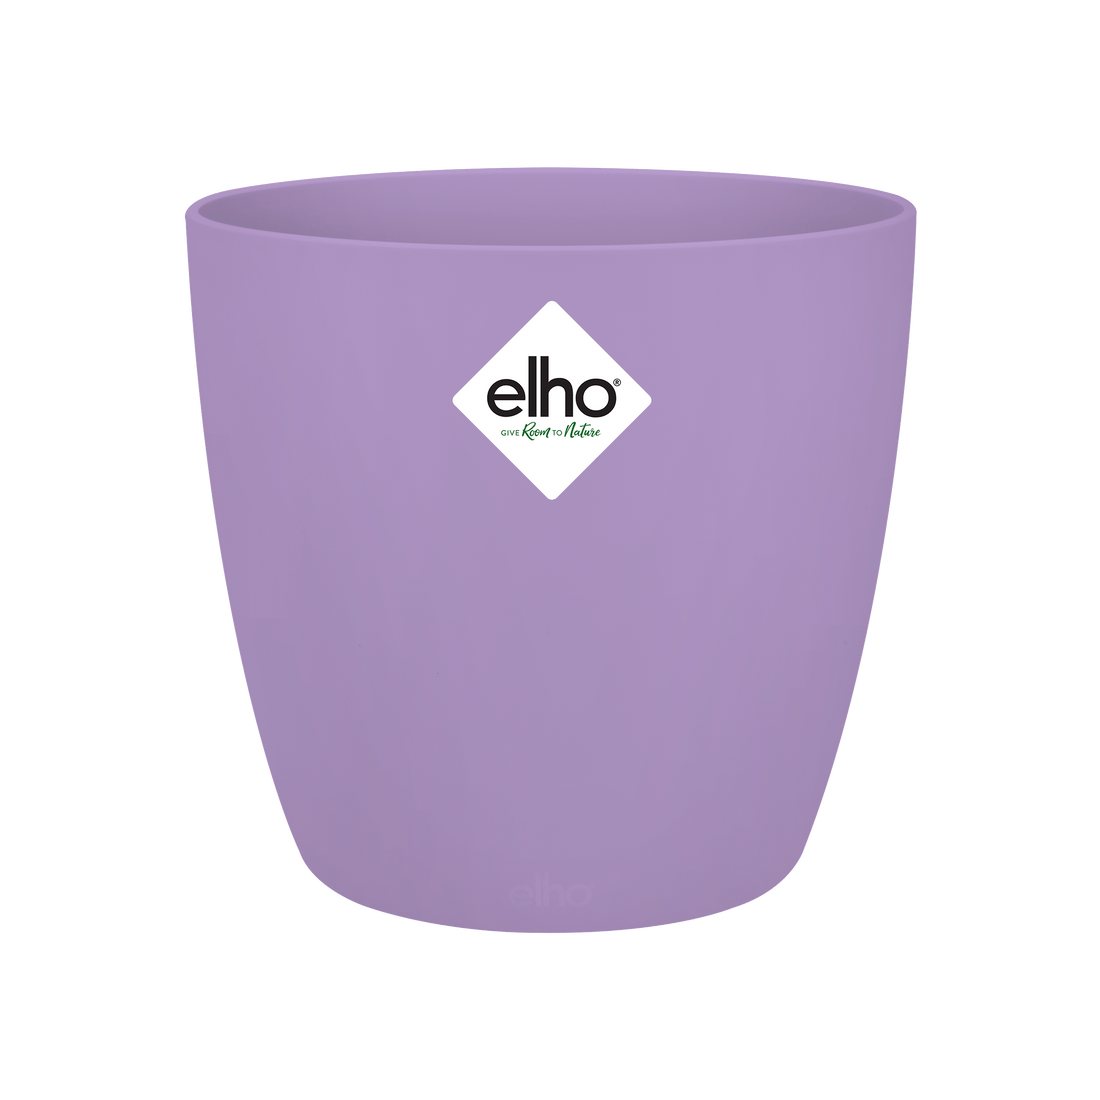 Elho Plant Pot Recycled Plastic Plant Pot - 'brussels mini round' in Living Black